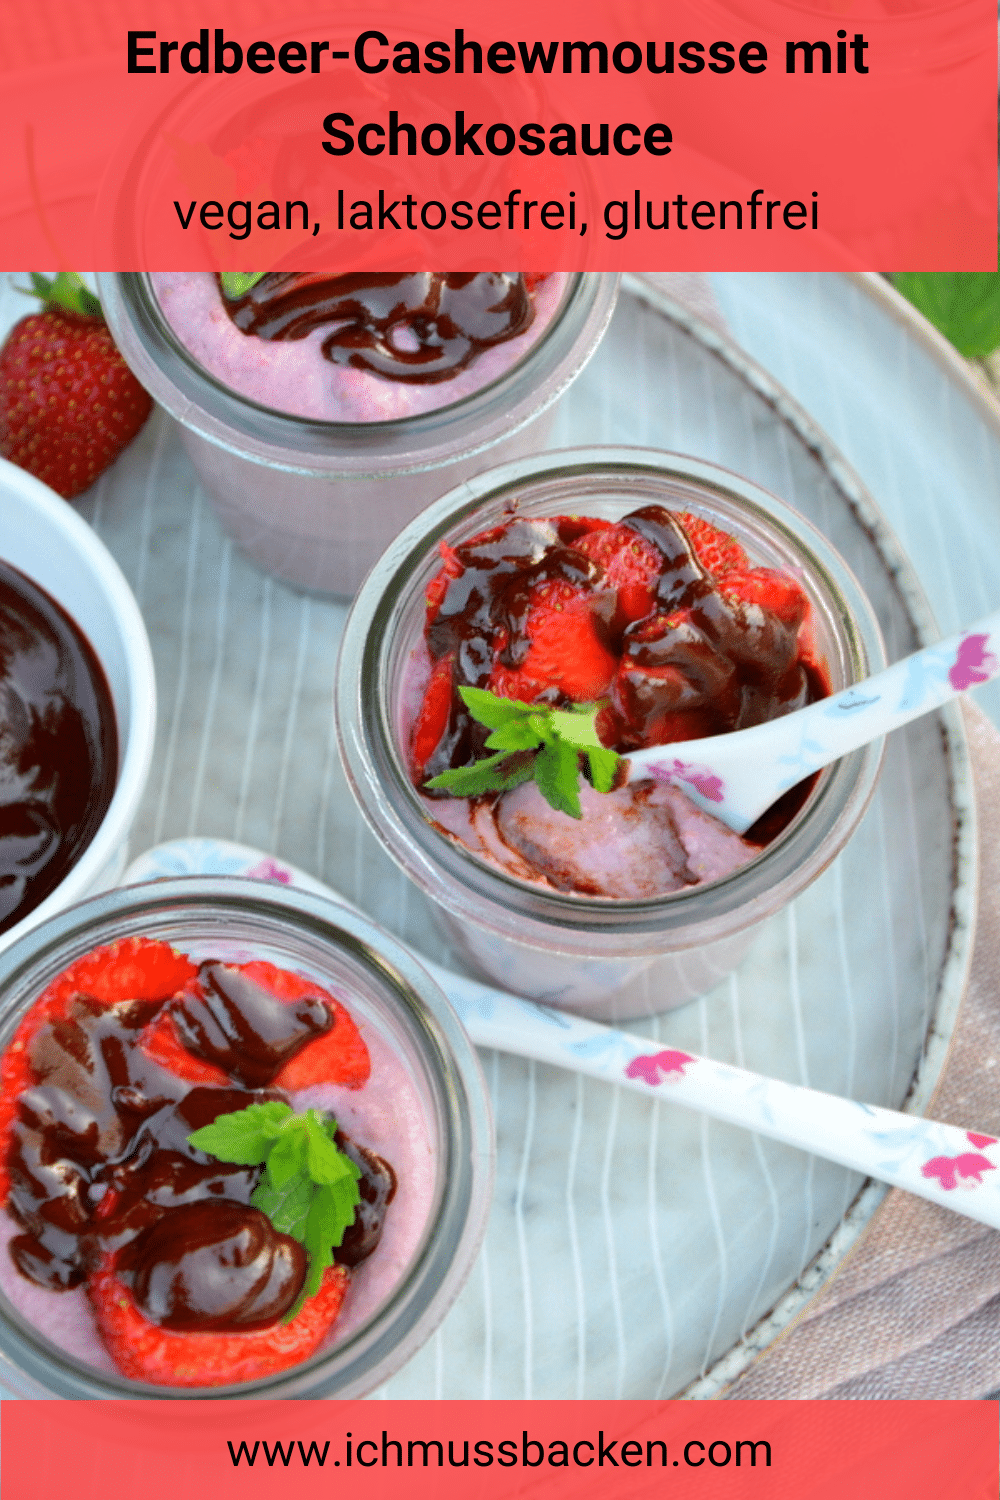 Erdbeer-Cashewmousse mit Schokosauce, vegan